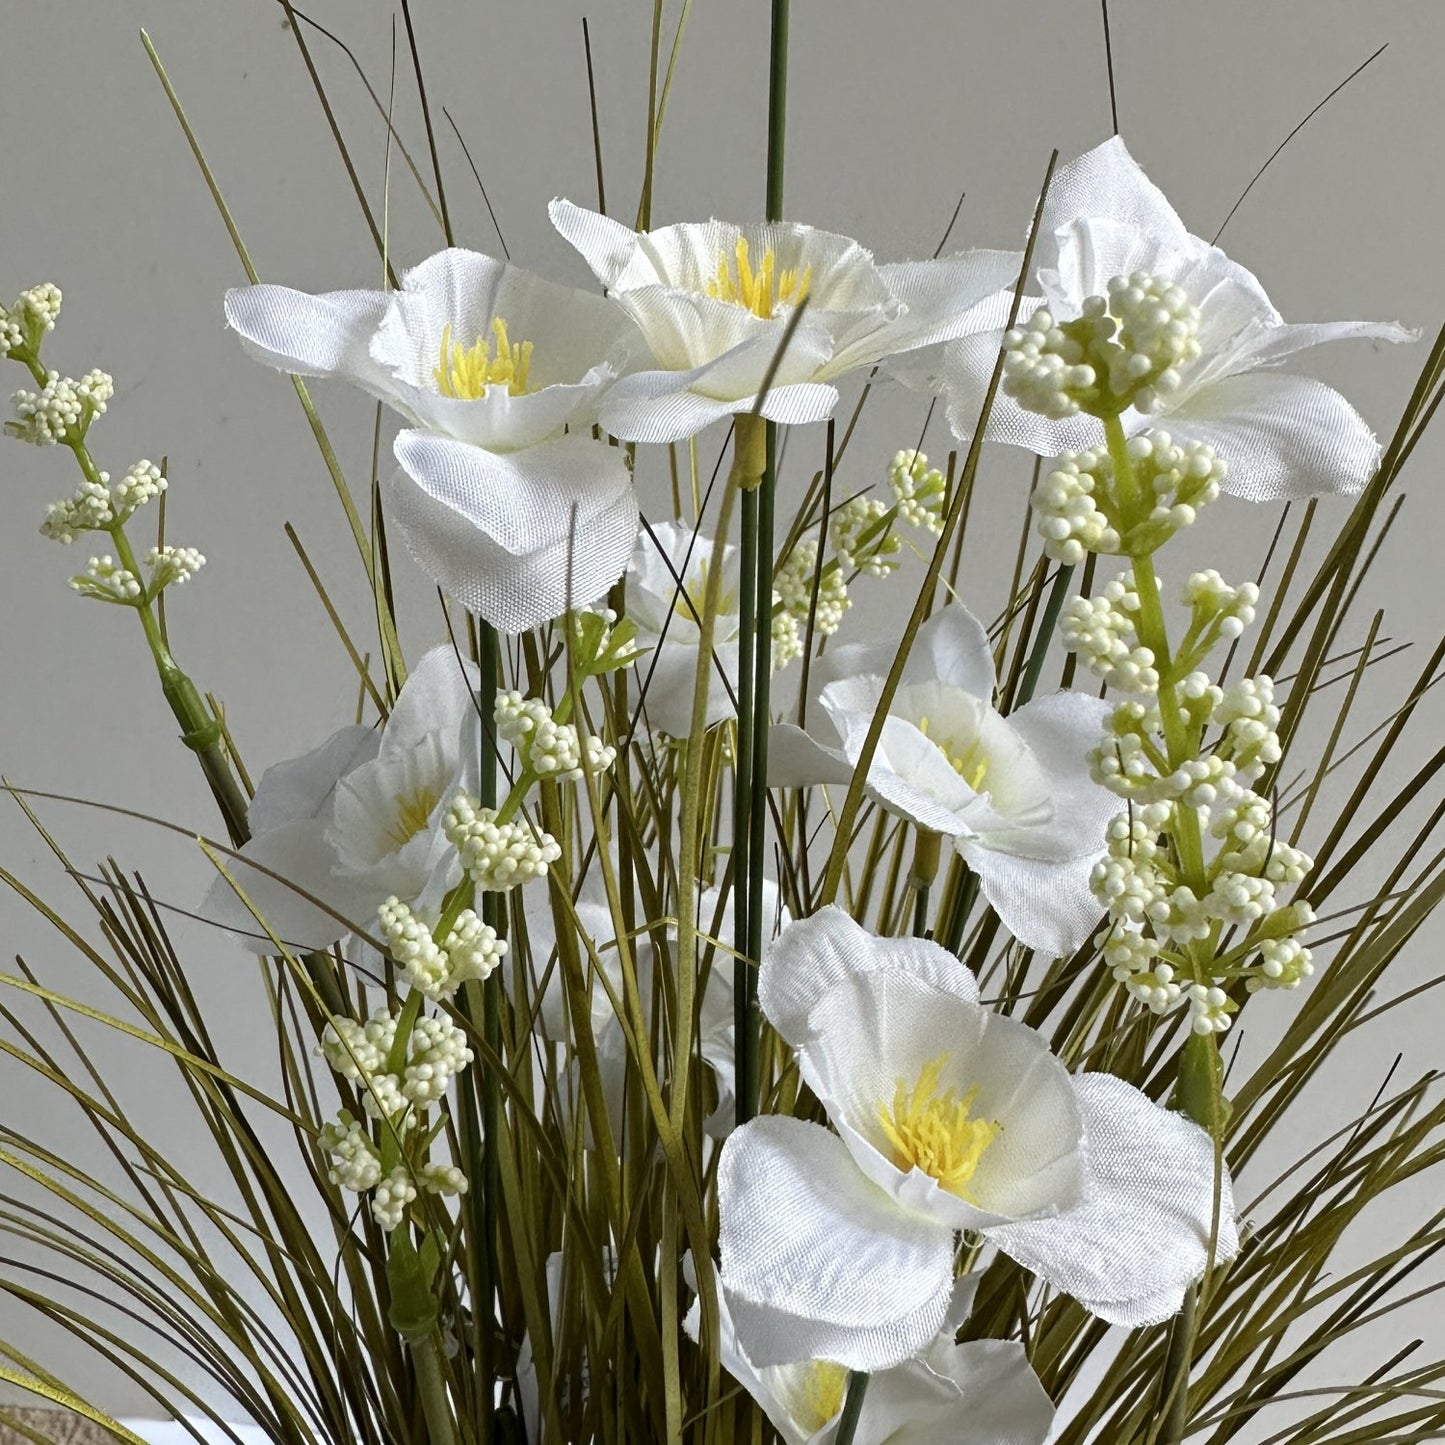 Artificial Grass and Narcissus Flower Arrangement 45cm